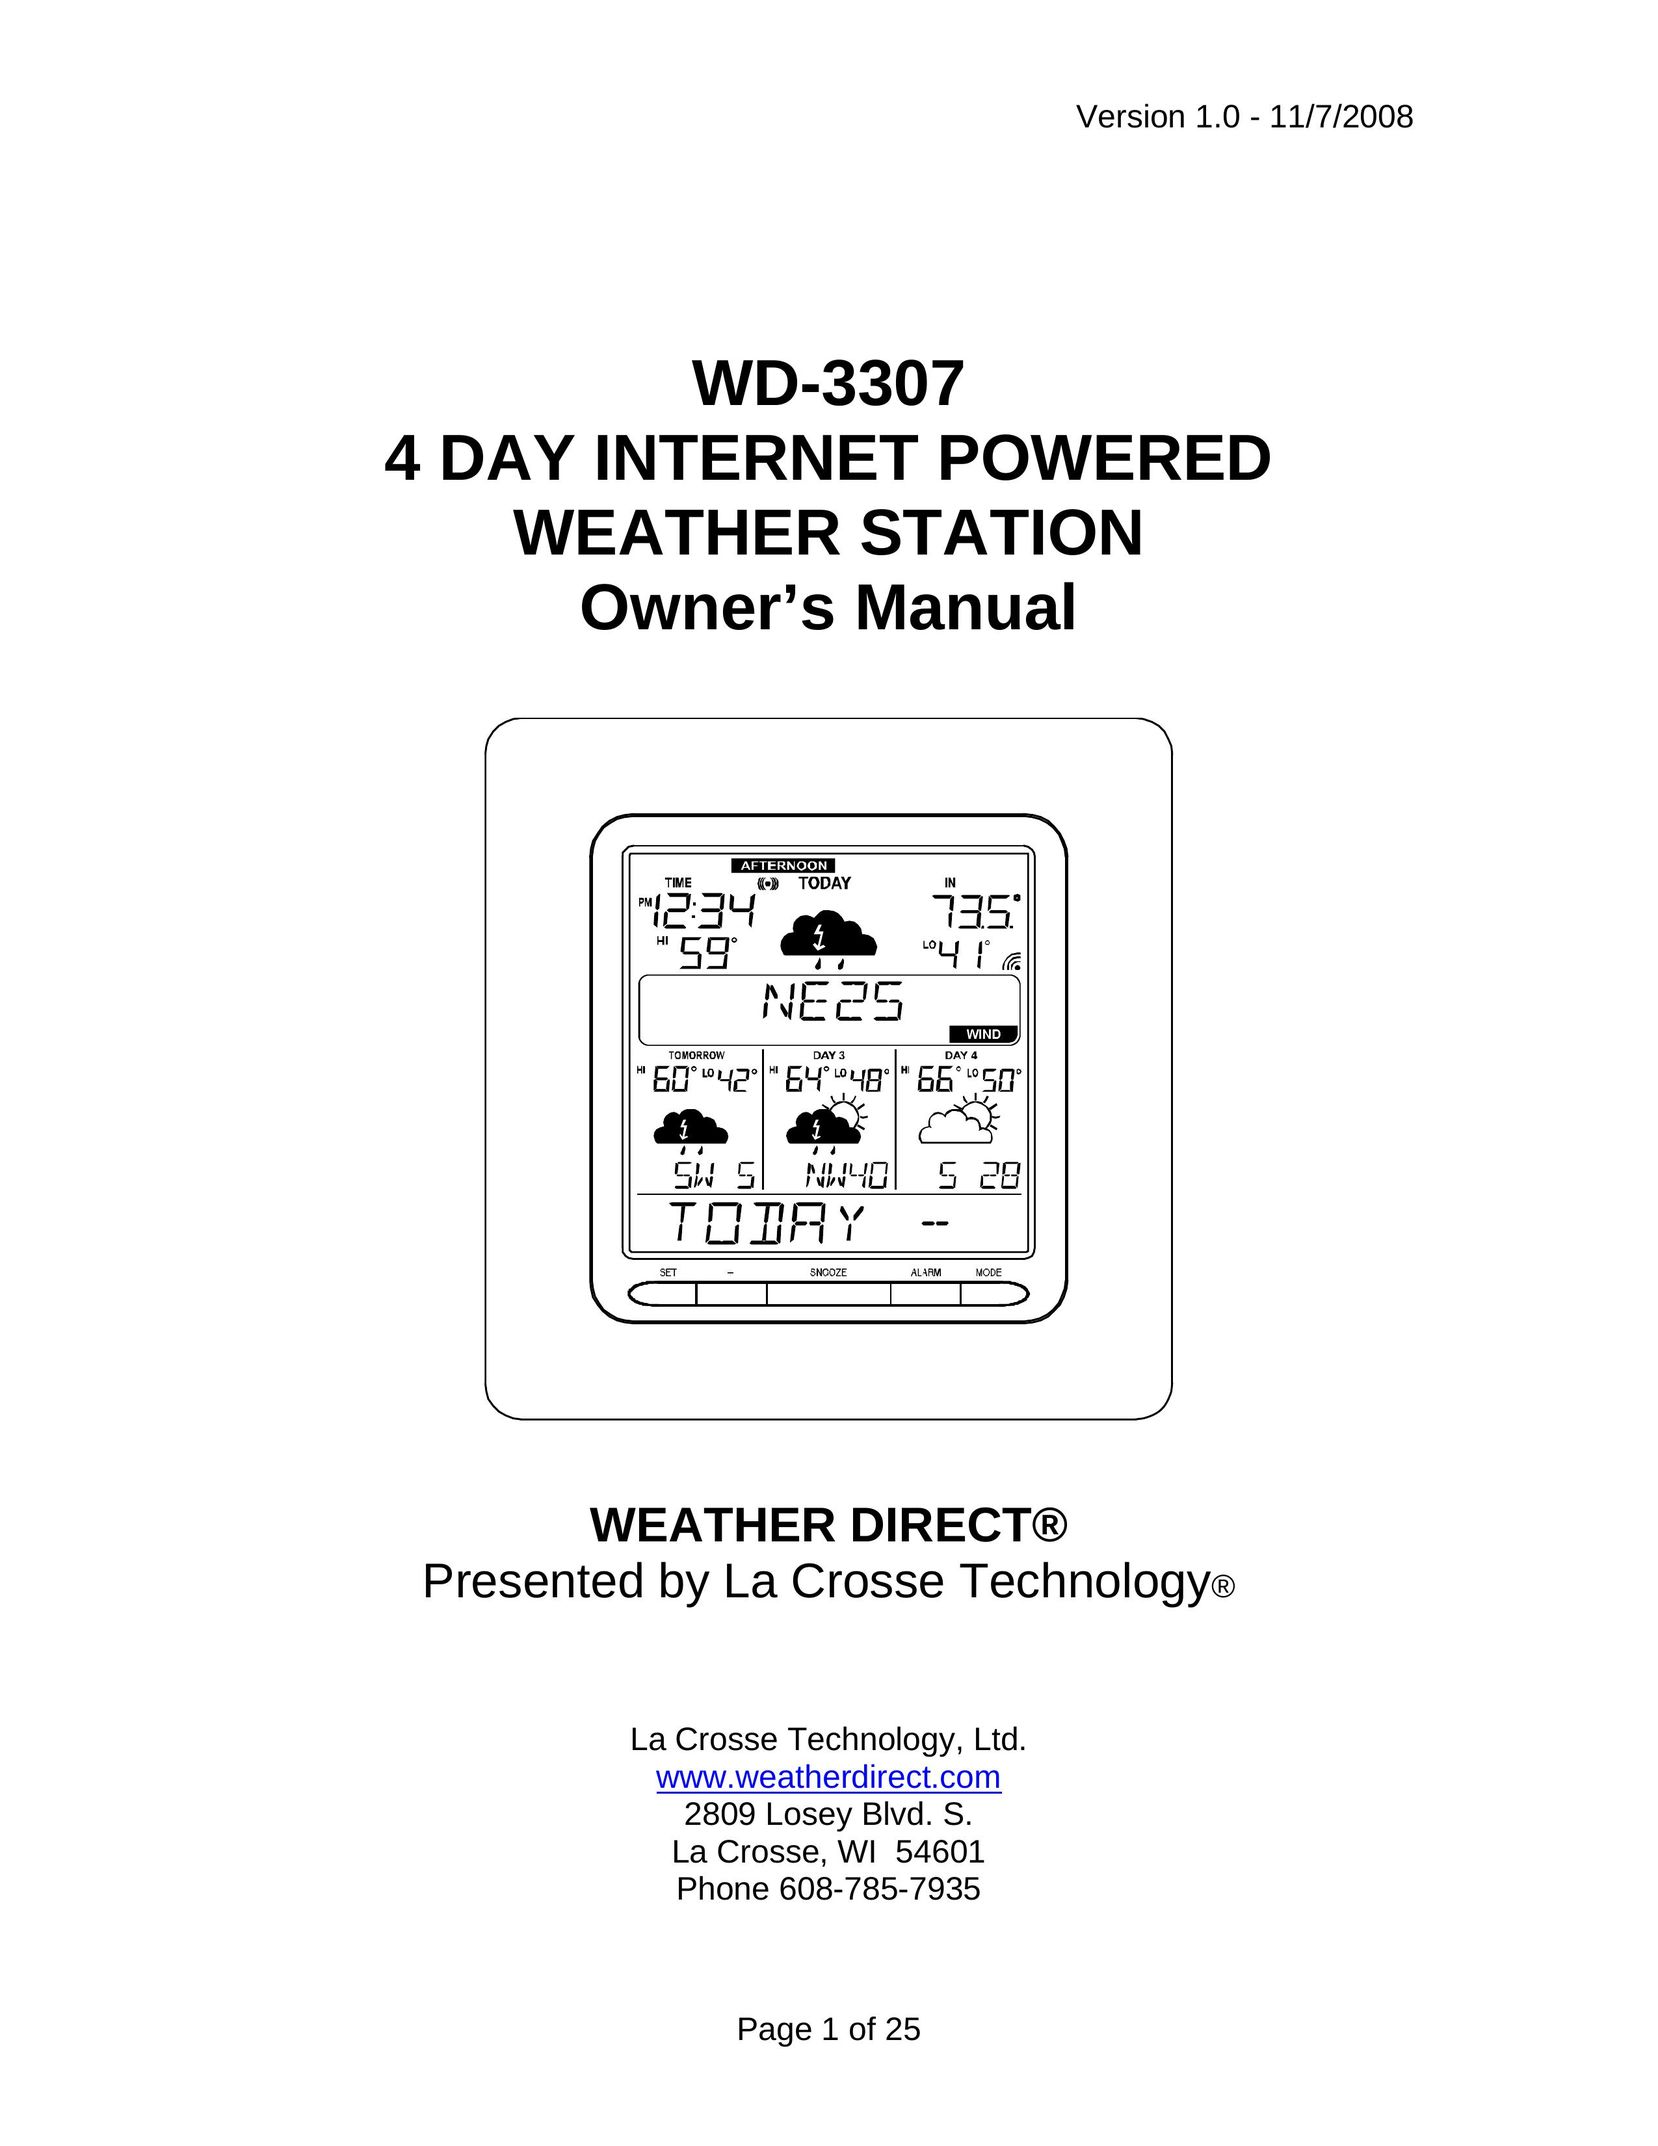 La Crosse Technology WD-3307 Portable Radio User Manual